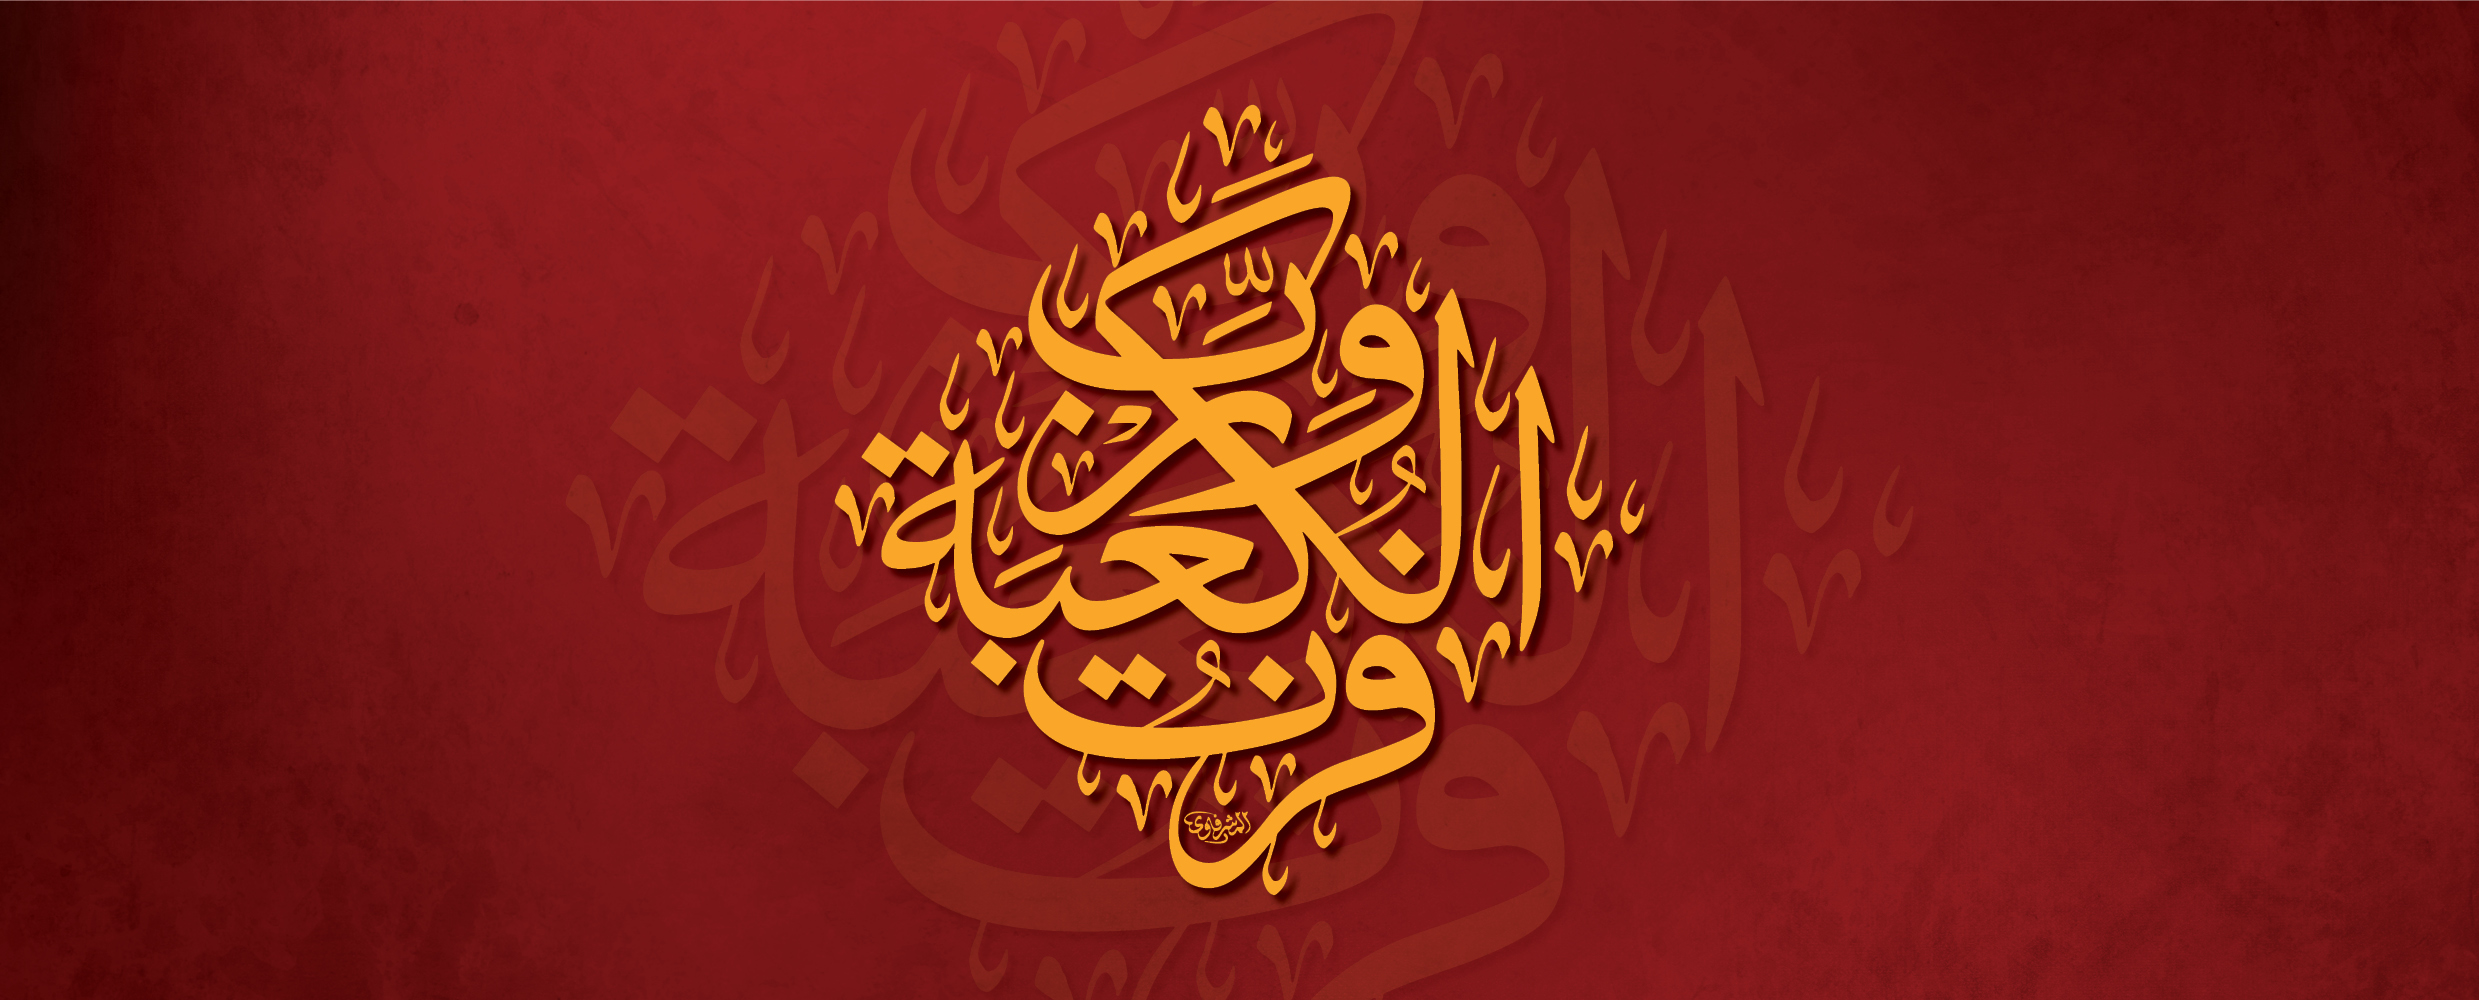 Part of Imam Ali's (PBUH) life, heritage, and characteristics